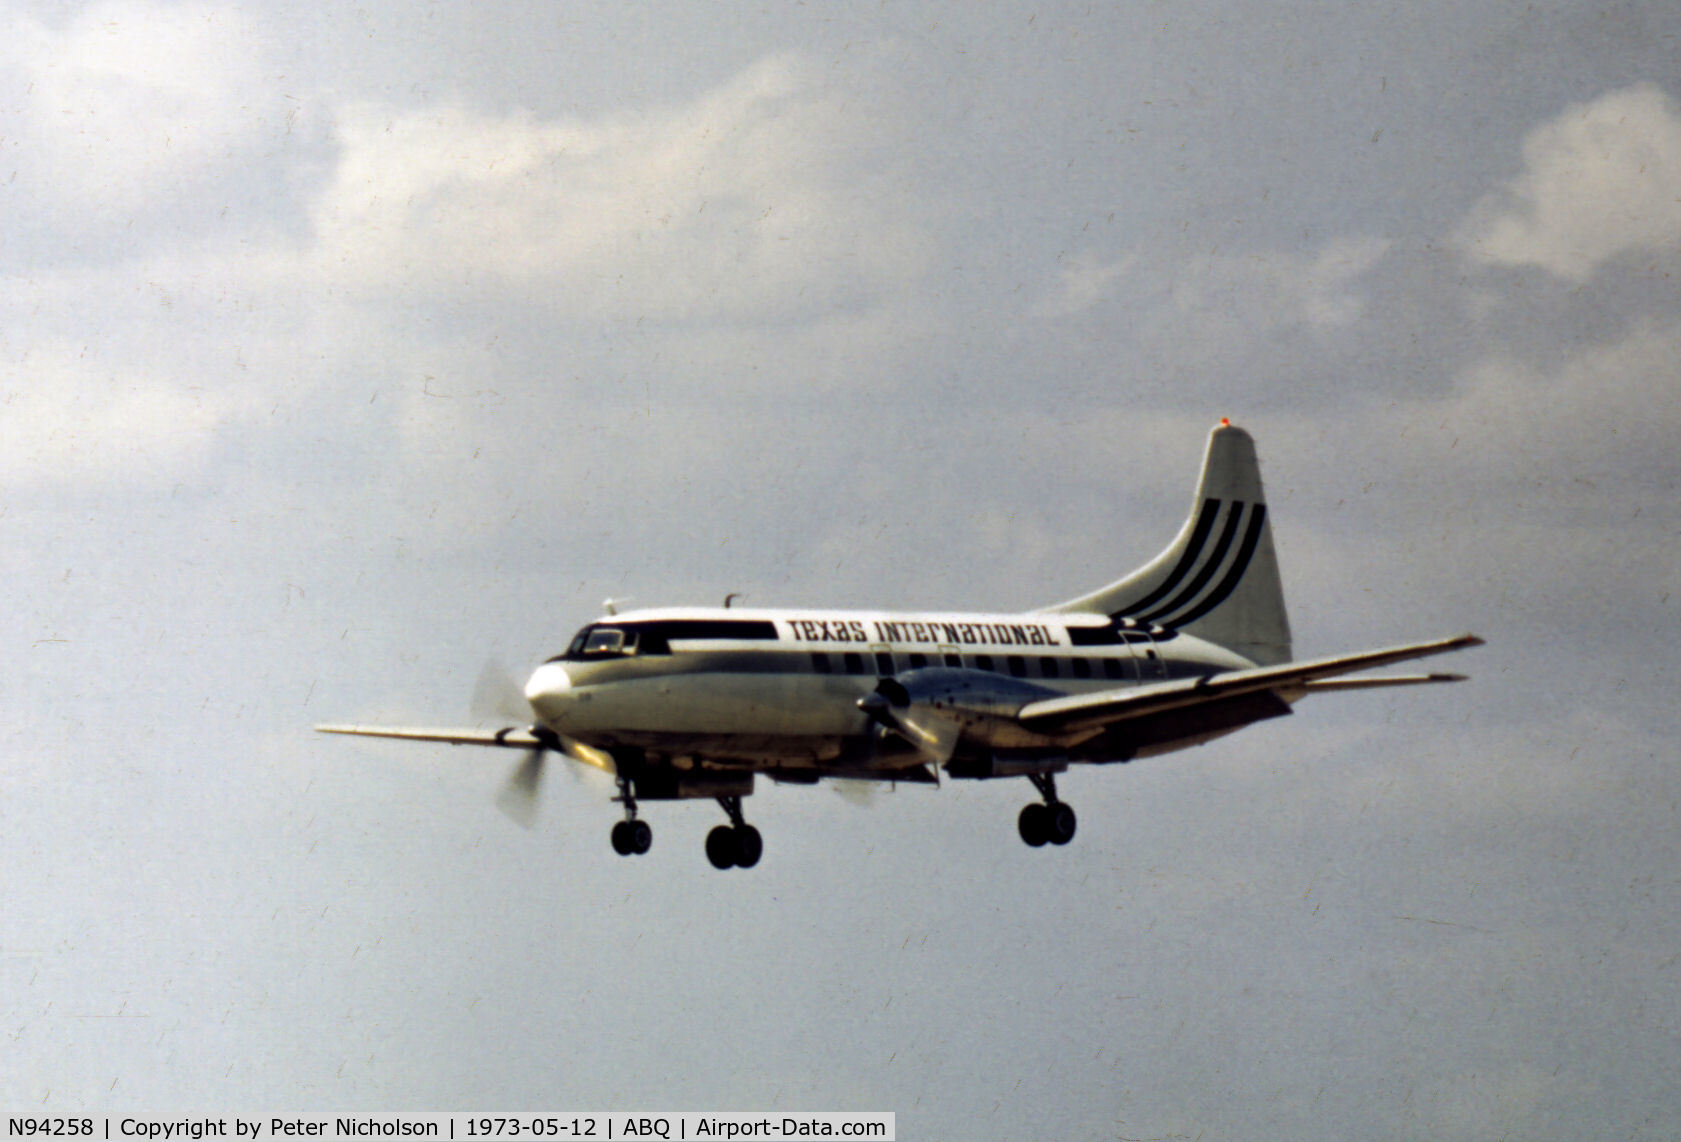 N94258, 1948 Convair 600-240D C/N 119, Convair of Texas International on approach to Albuquerque, New Mexico in May 1973